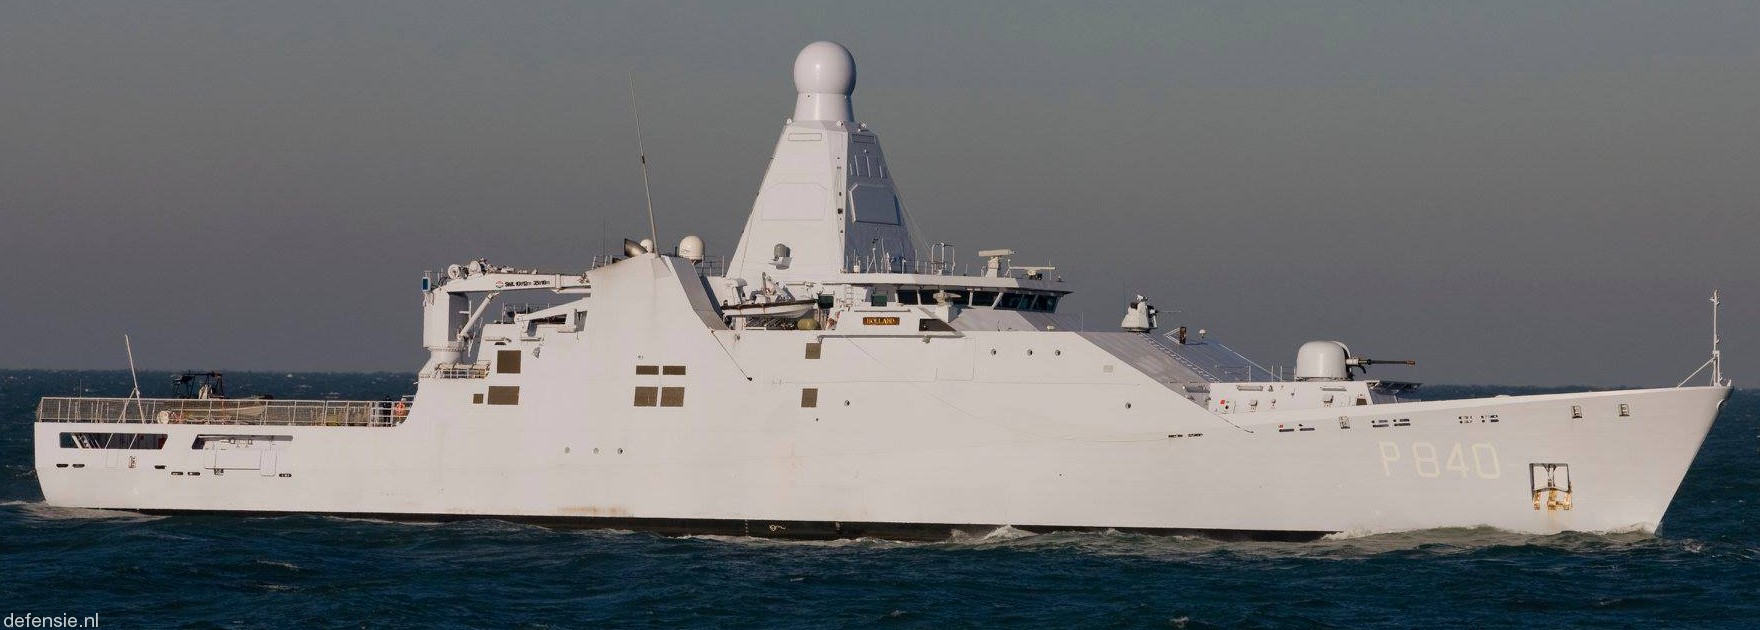 p-840 hnlms holland offshore patrol vessel opv royal netherlands navy 21